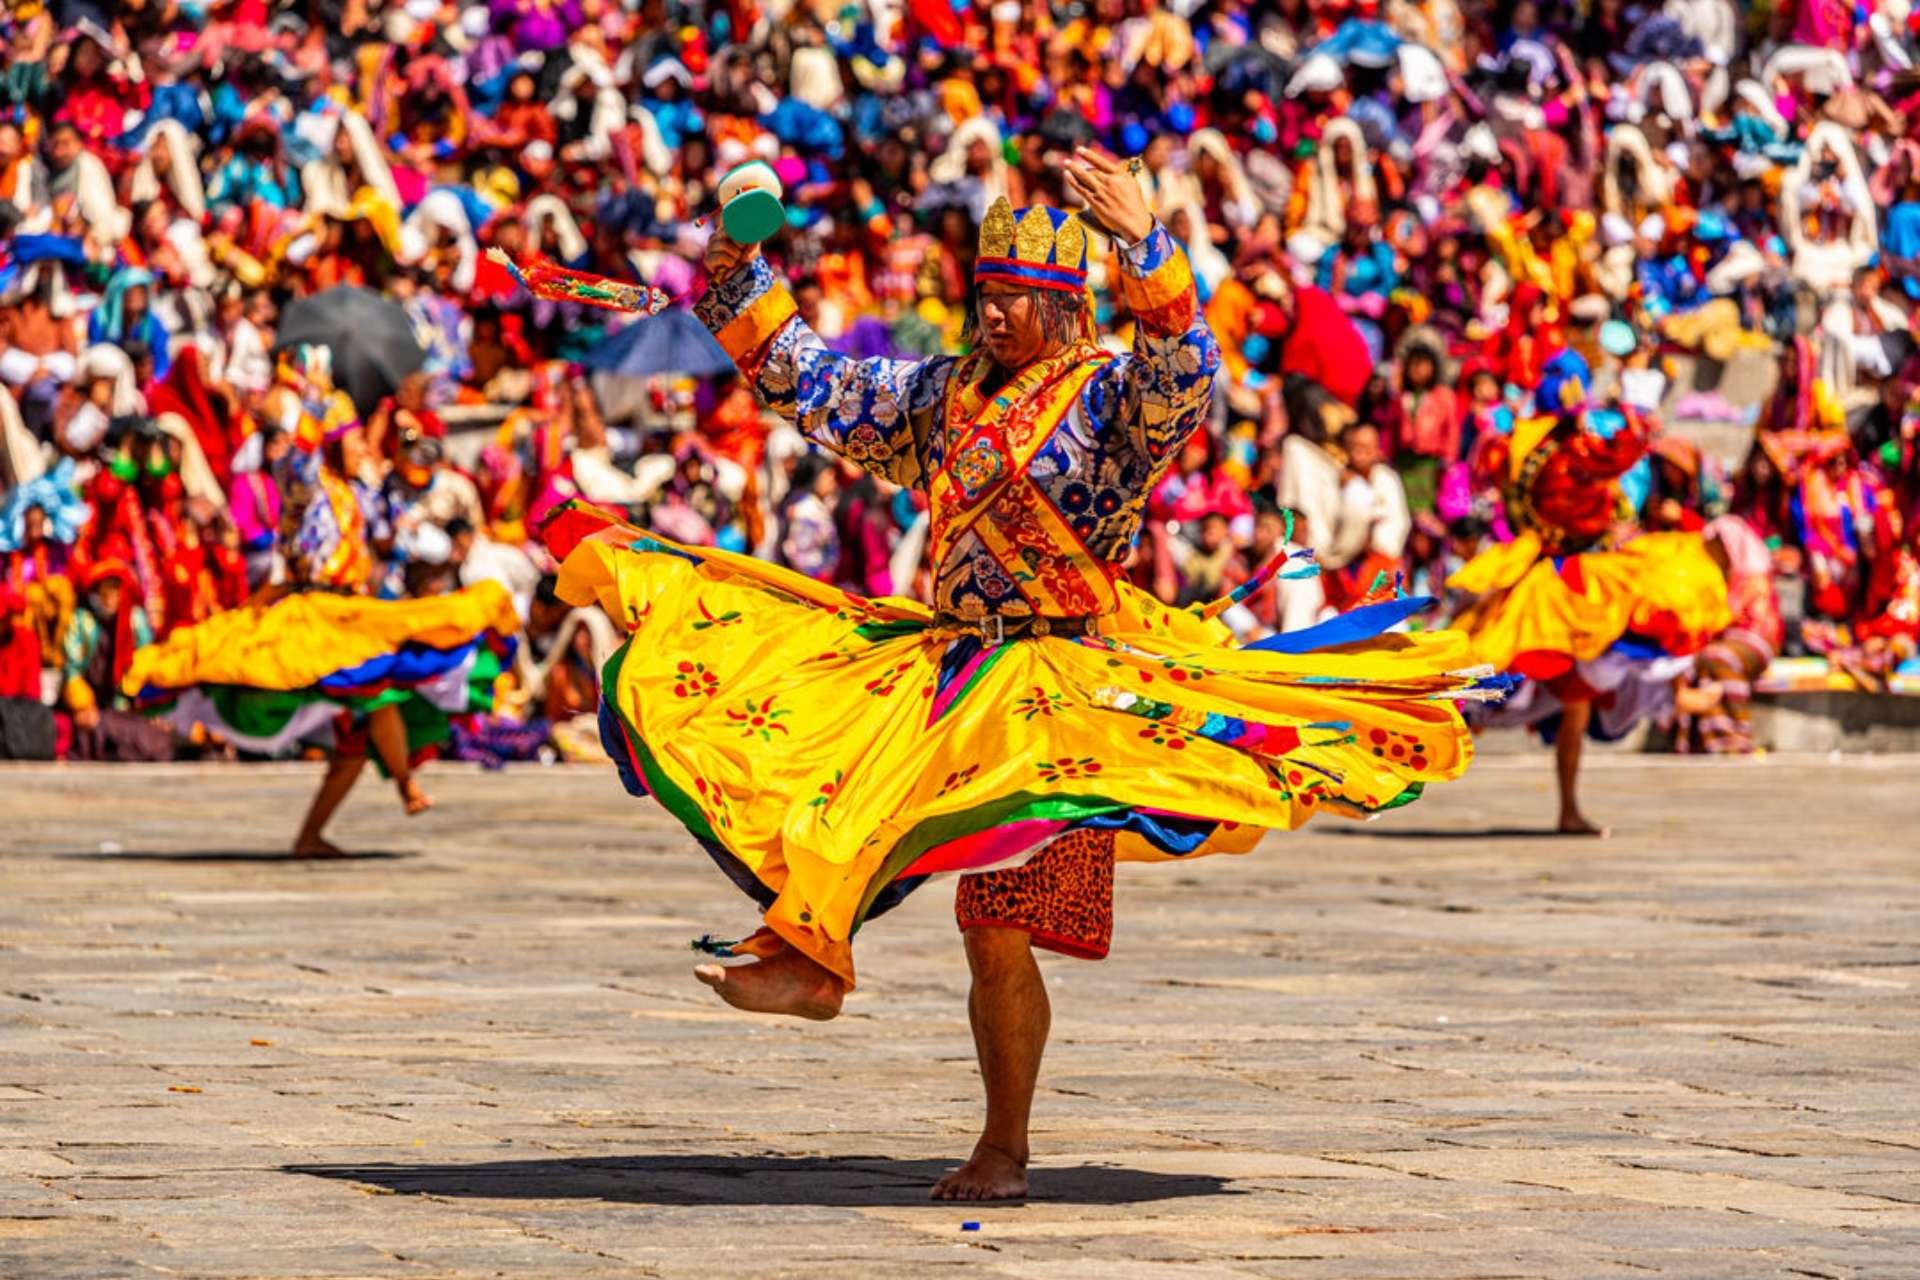 Colourful festival in the capital city of Thimphu, Bhutan. ©BhutanBelieve